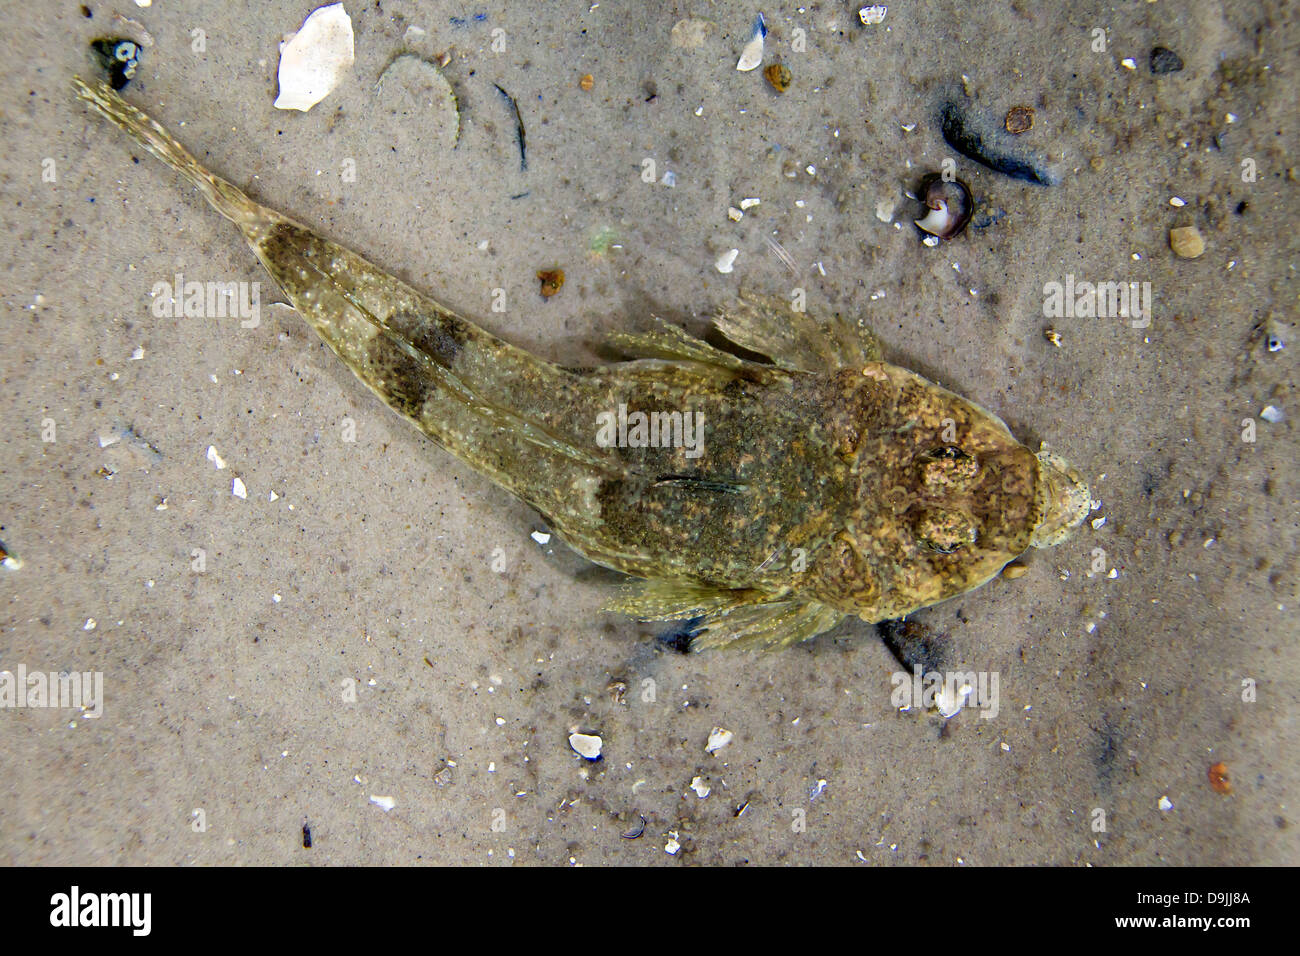 Pogge / Hook-nose / Armed Bullhead (Agonus cataphractus) lying camouflaged in ambush on the seabed Stock Photo